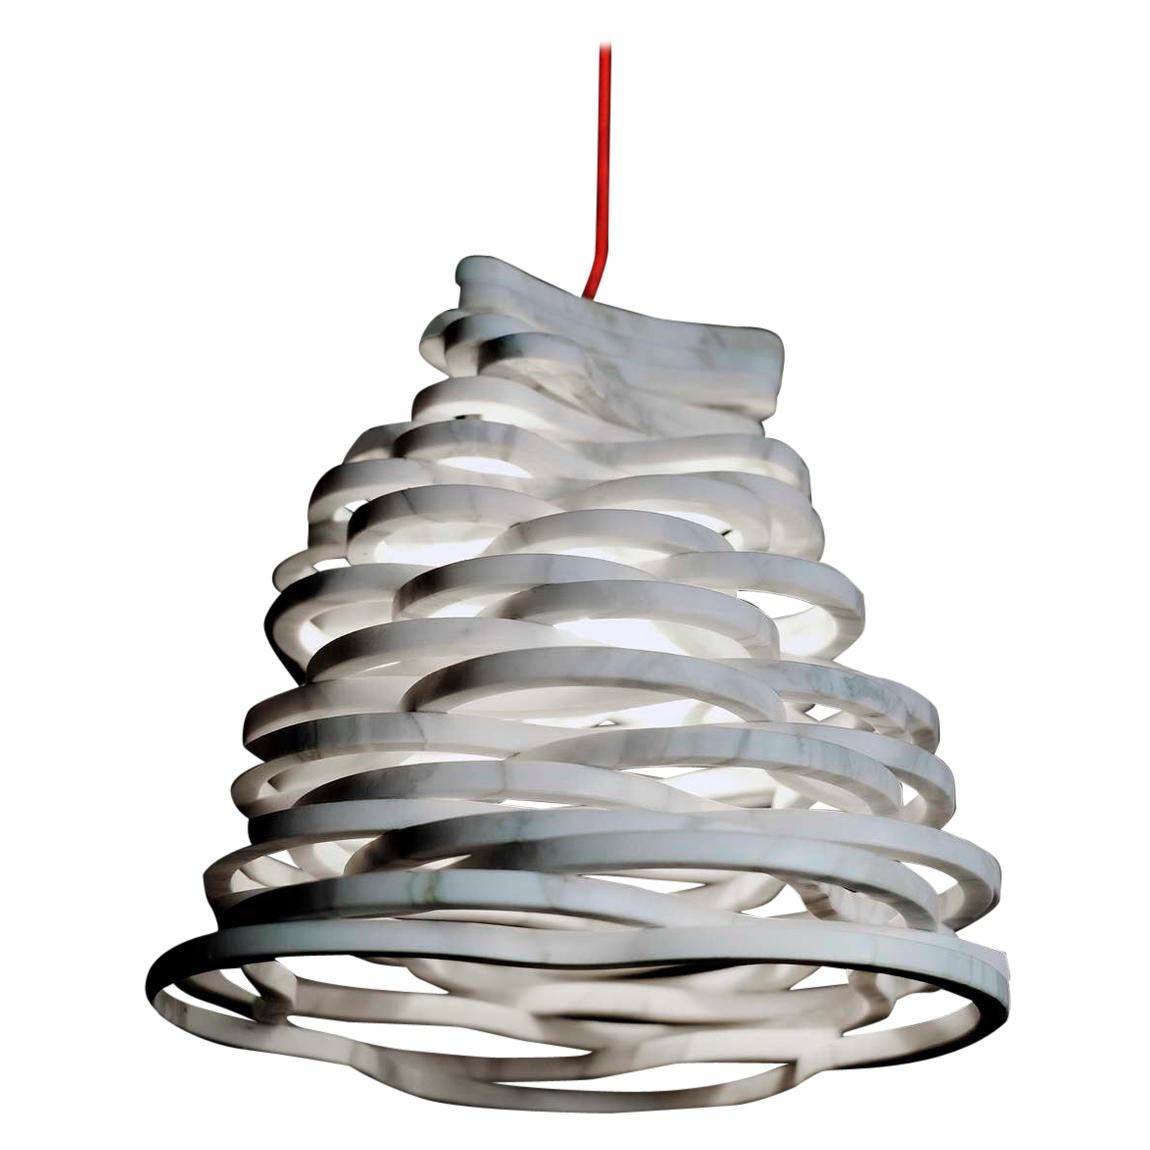 21st Century by Paolo Ullian "Annika" Pendant Lamp in White Carrara Marble